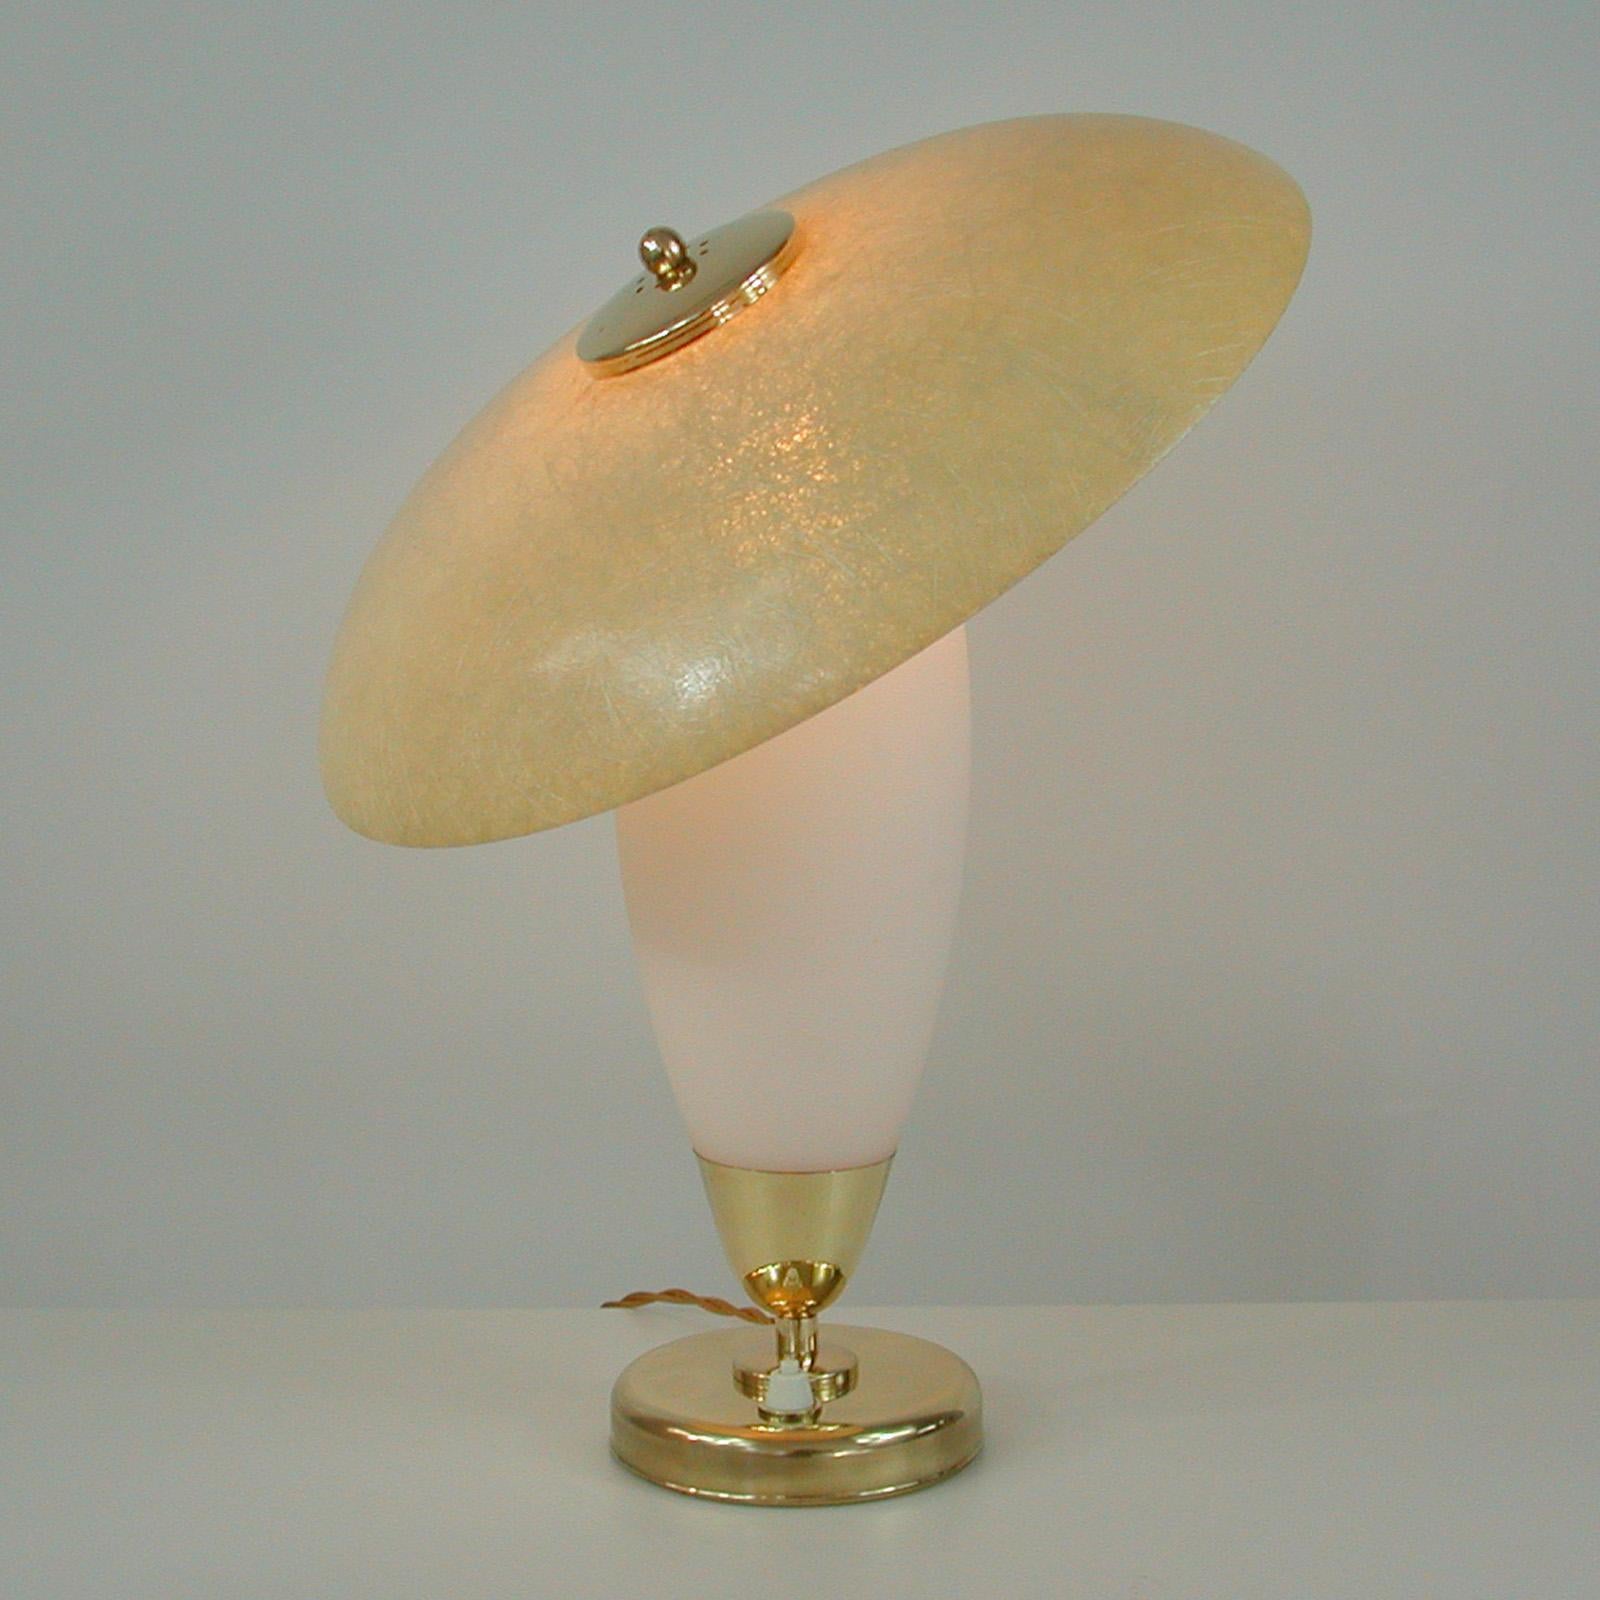 Midcentury Swedish Modern Brass, Opaline and Fiberglass Saucer Table Lamp, 1950s For Sale 1